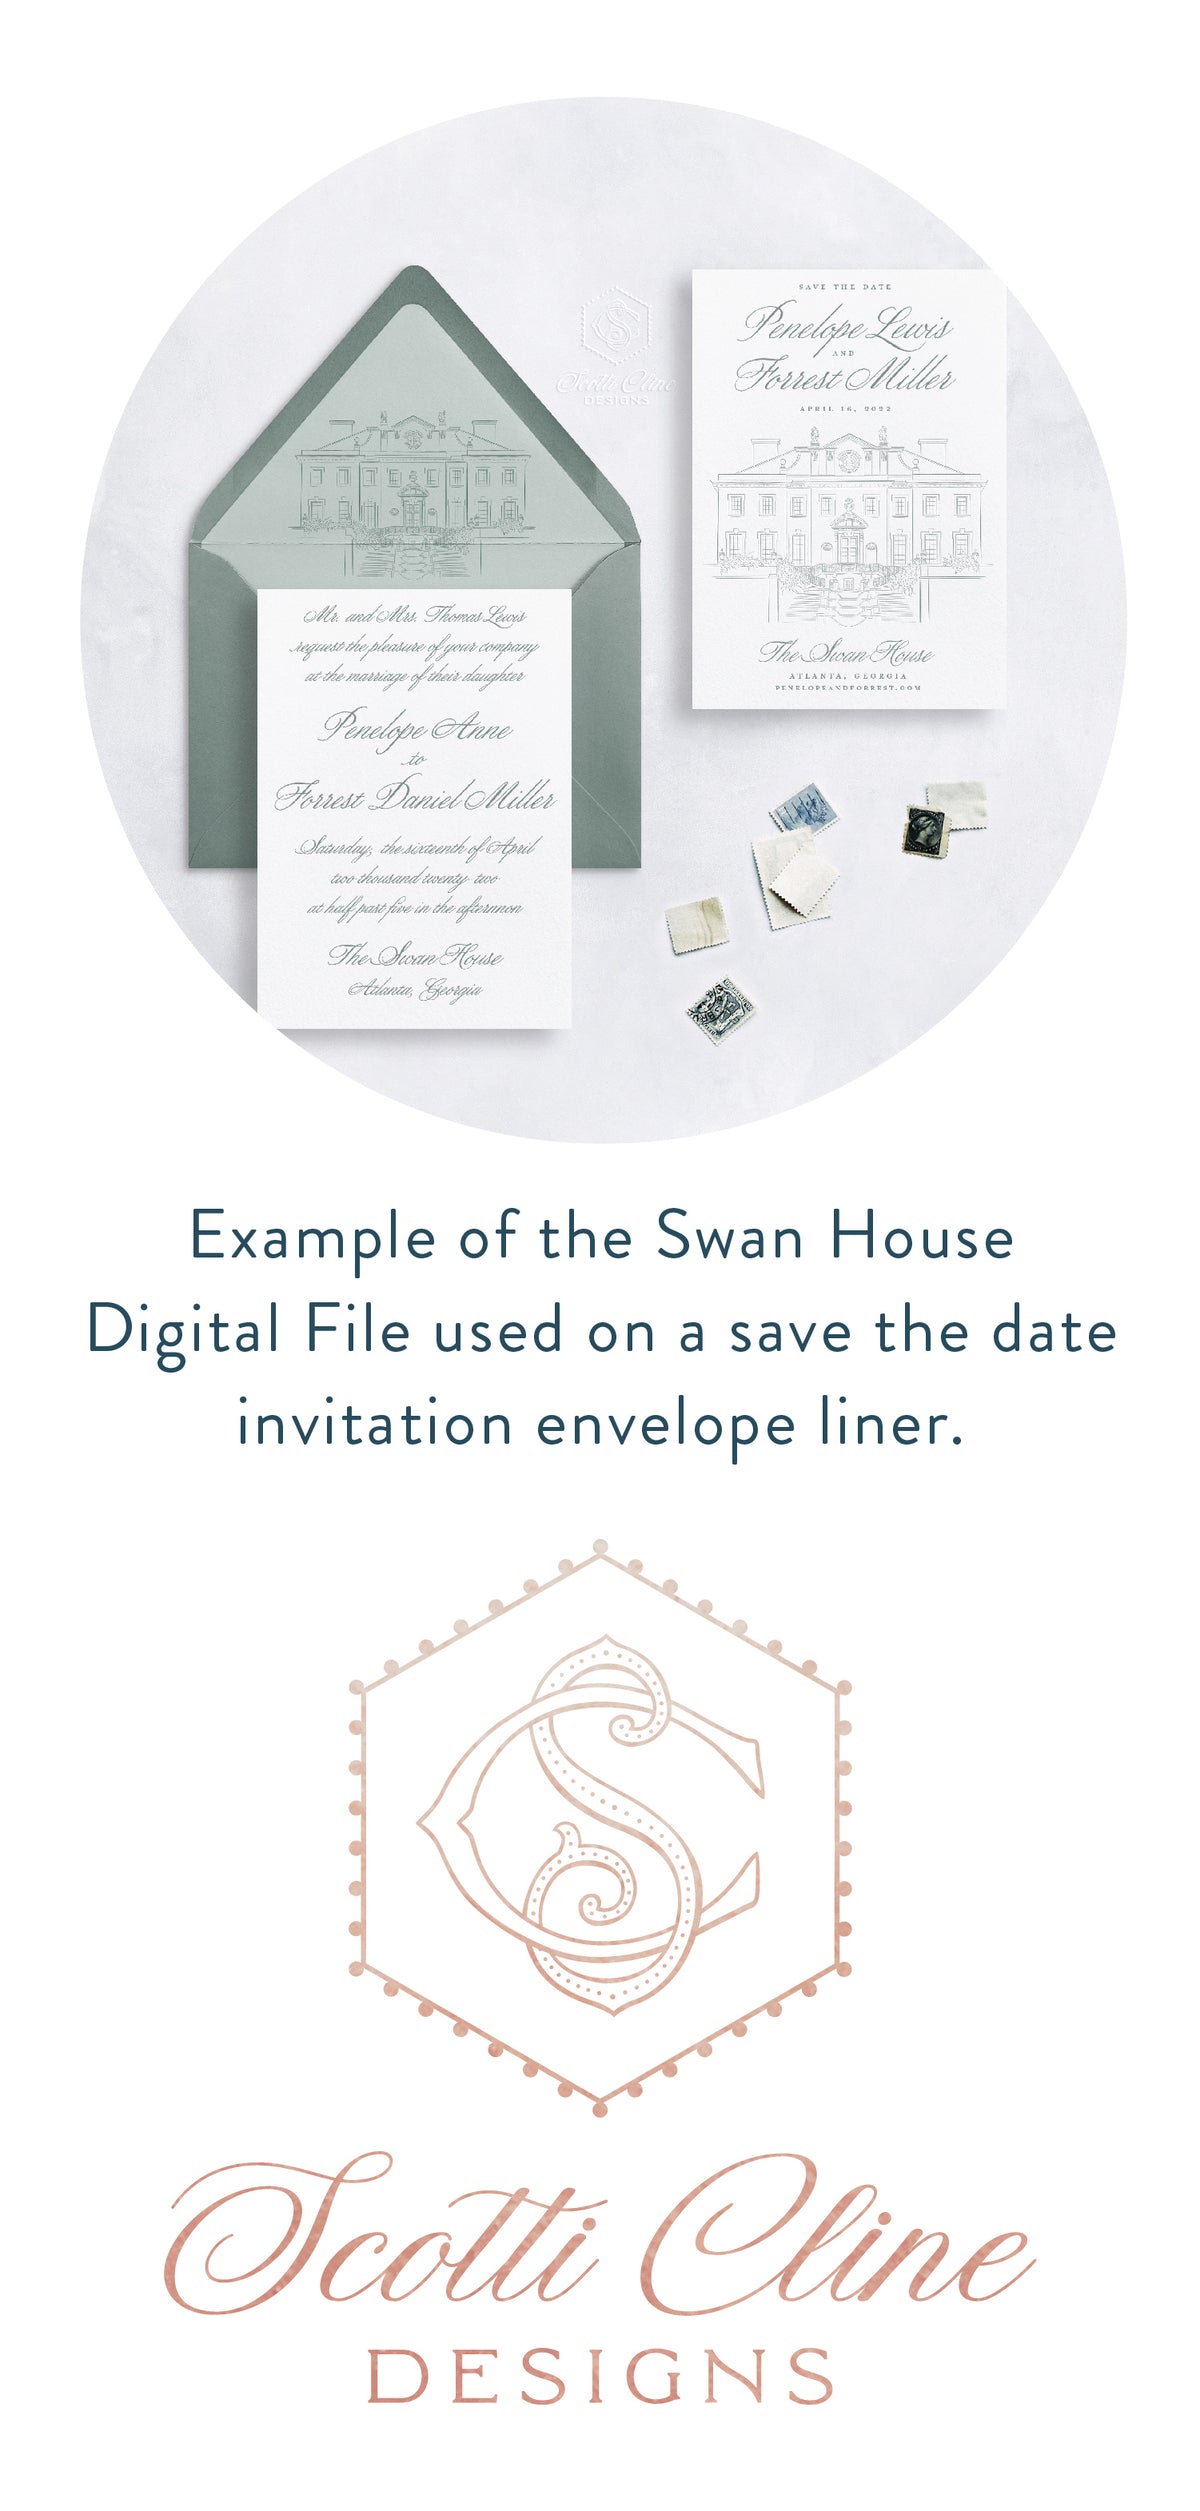 The Swan House Digital File